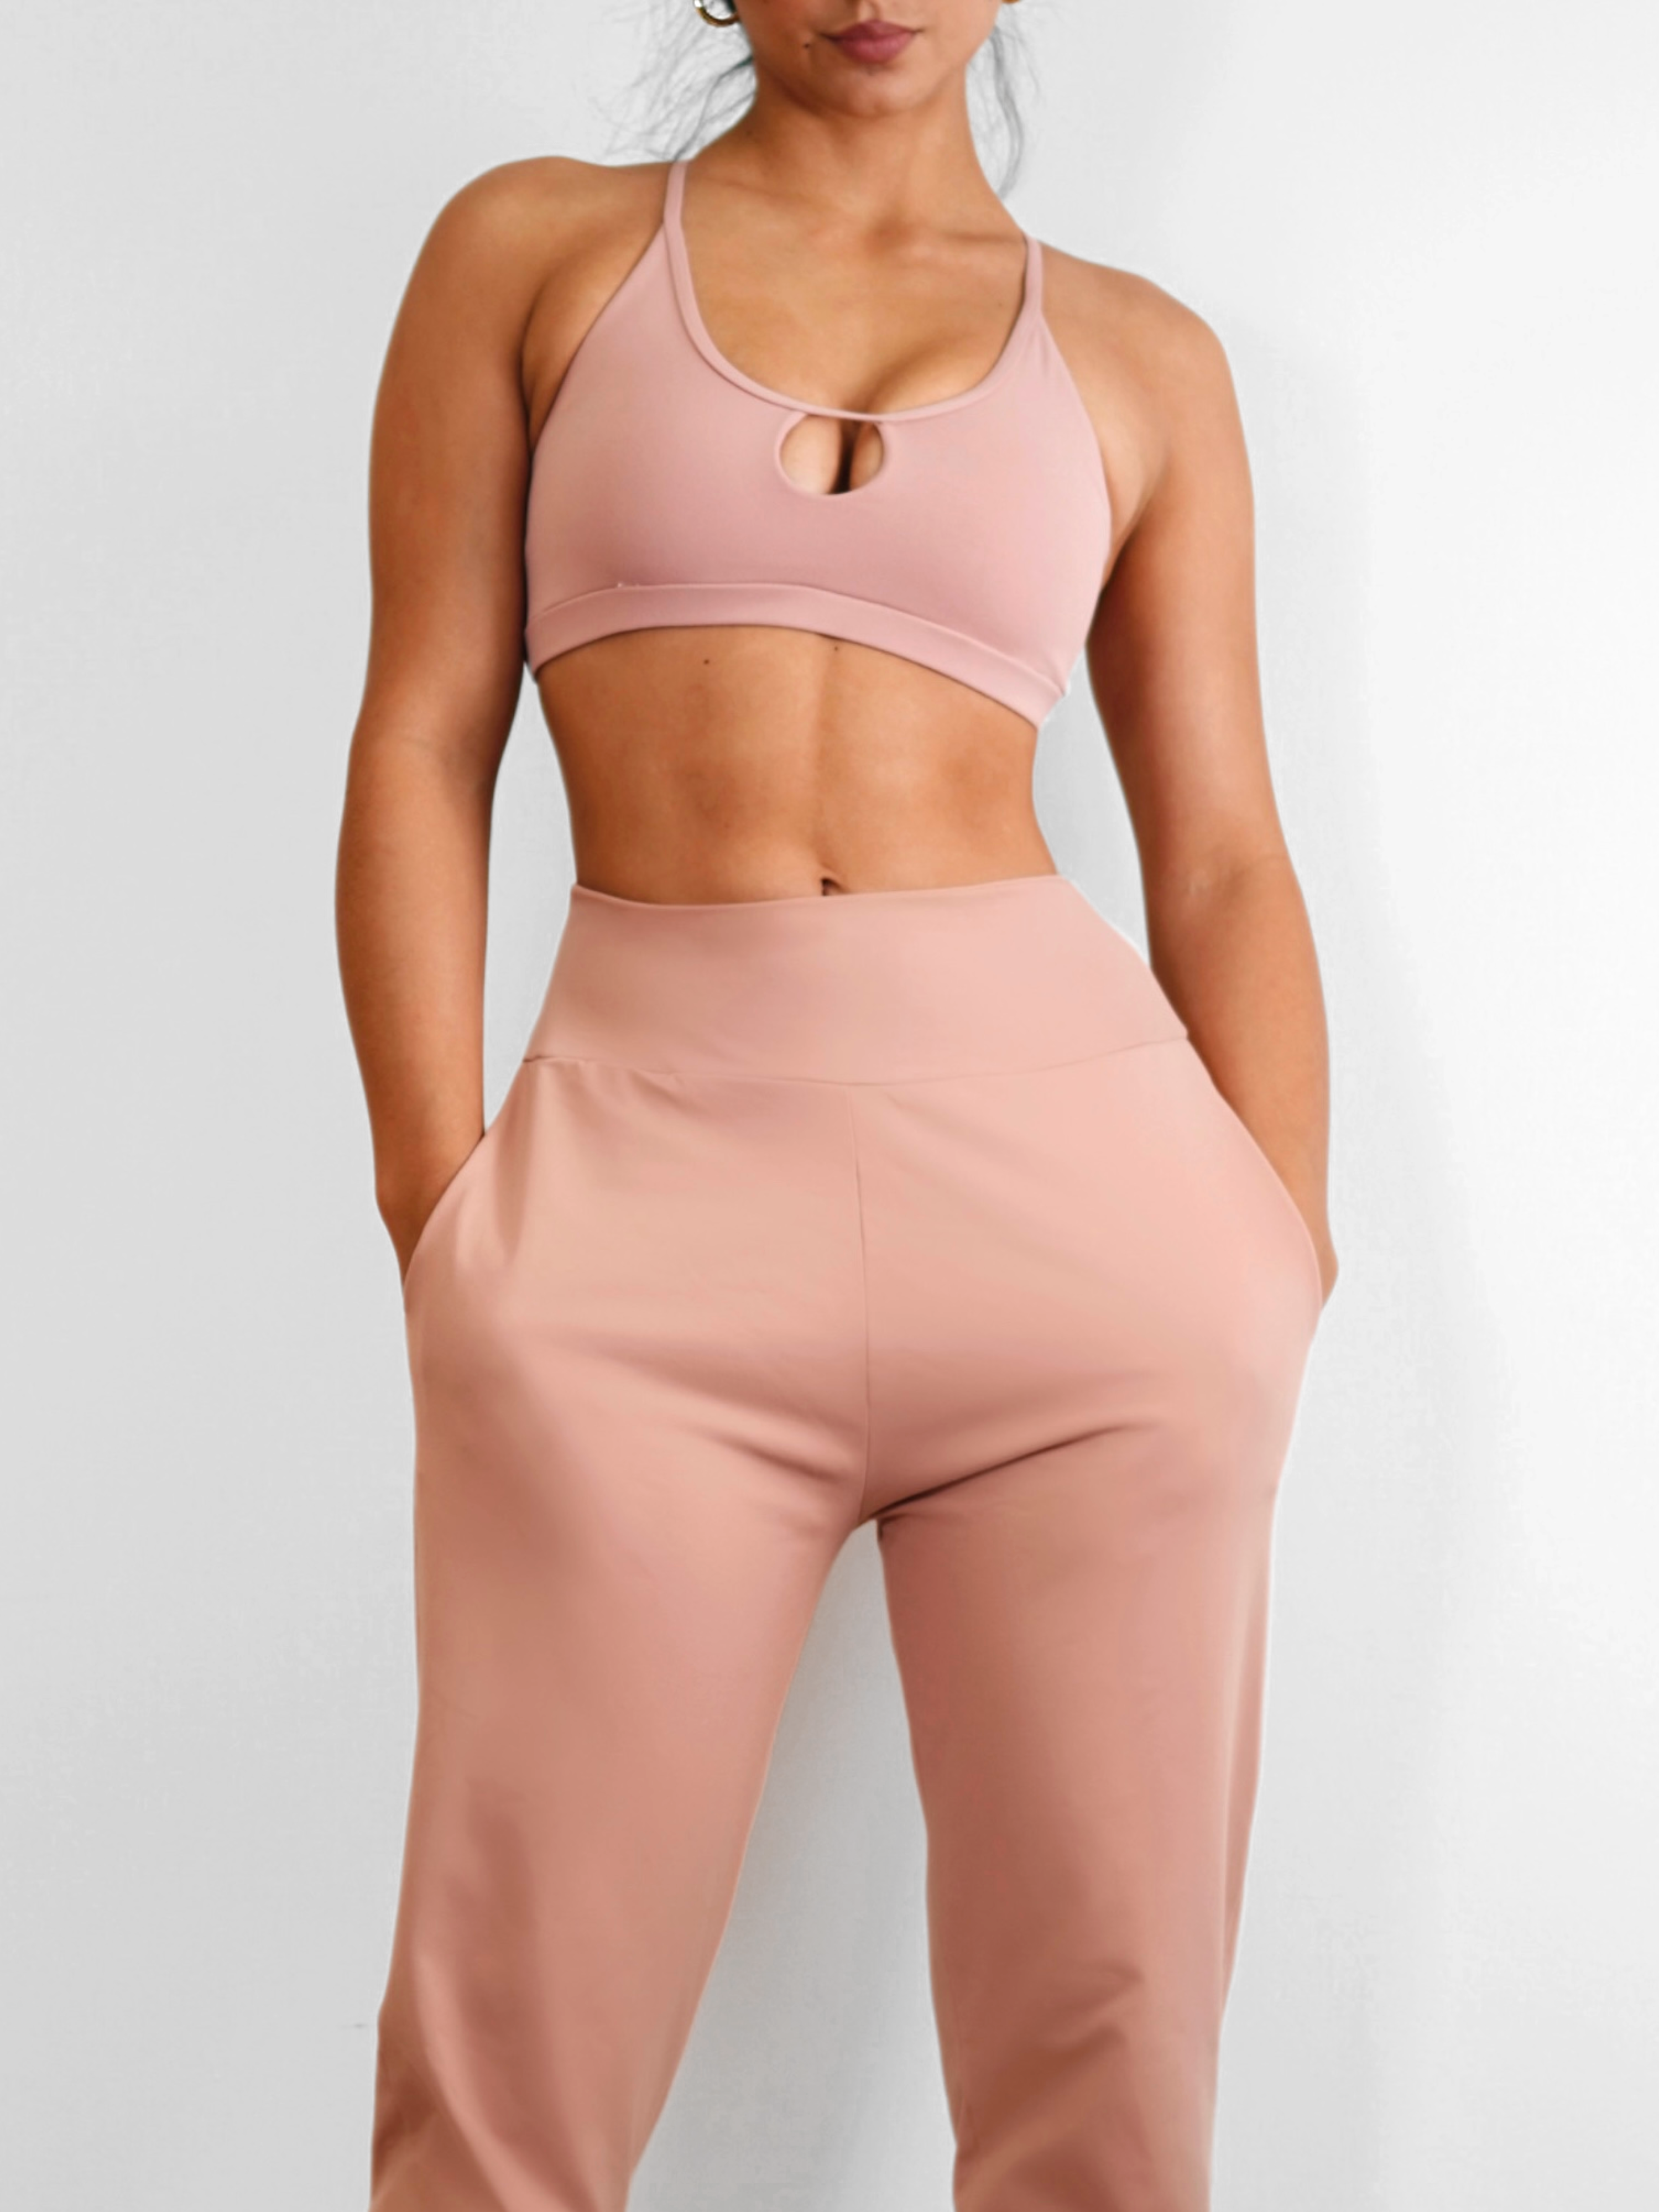 Body Strap Sports Bra (Hot Pink)